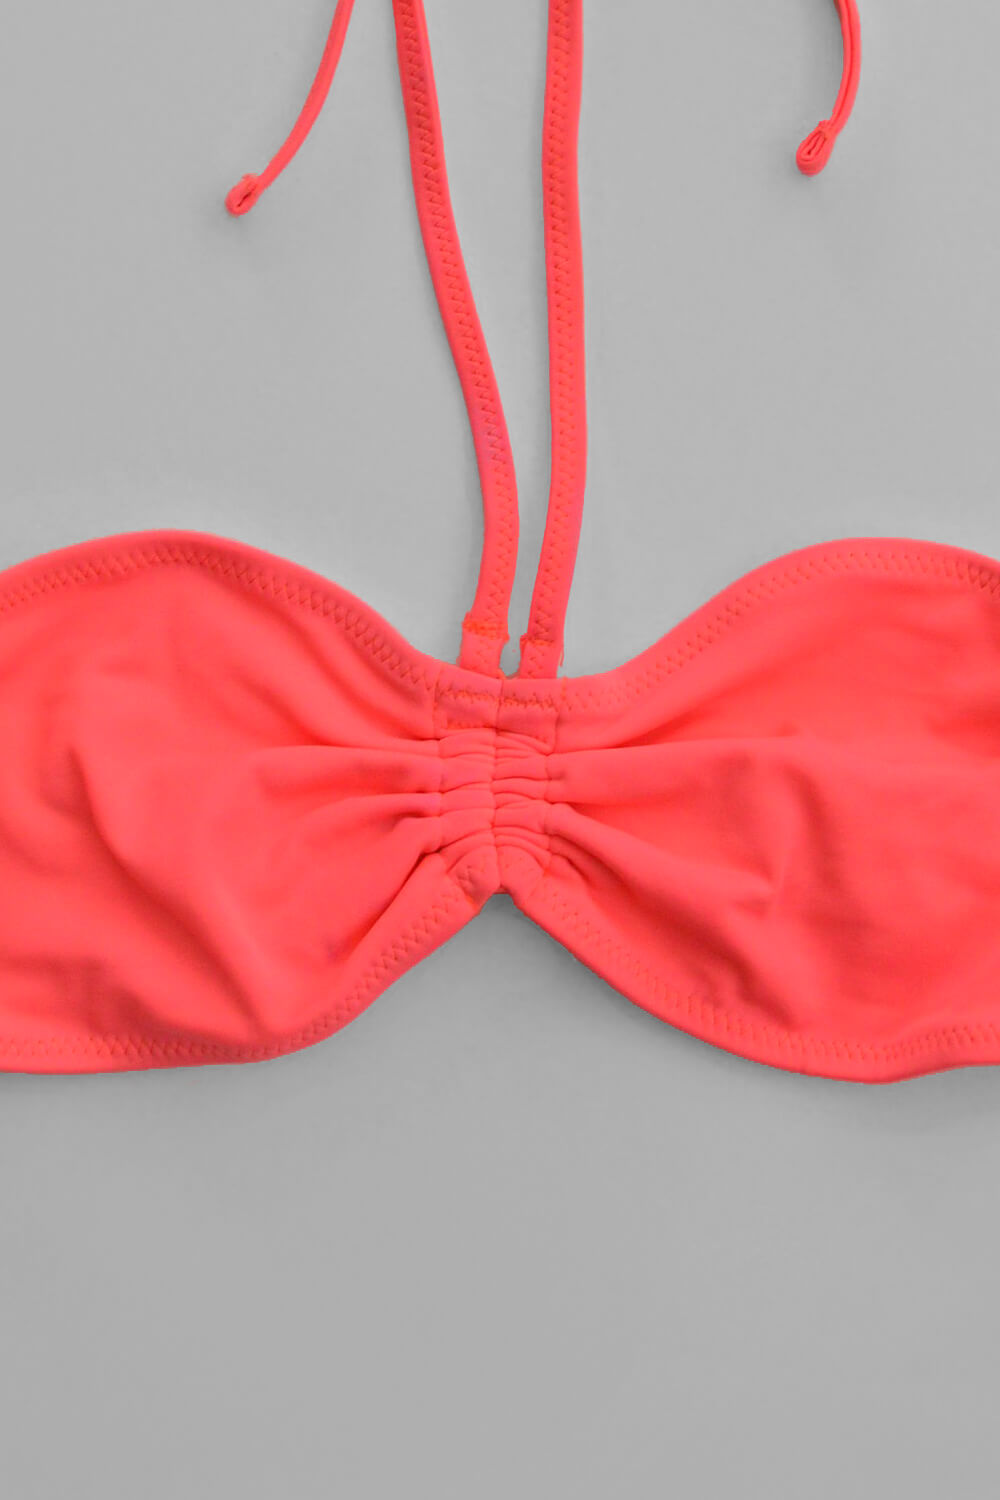 bandeau halter bikini top - neon pink coral - size 4